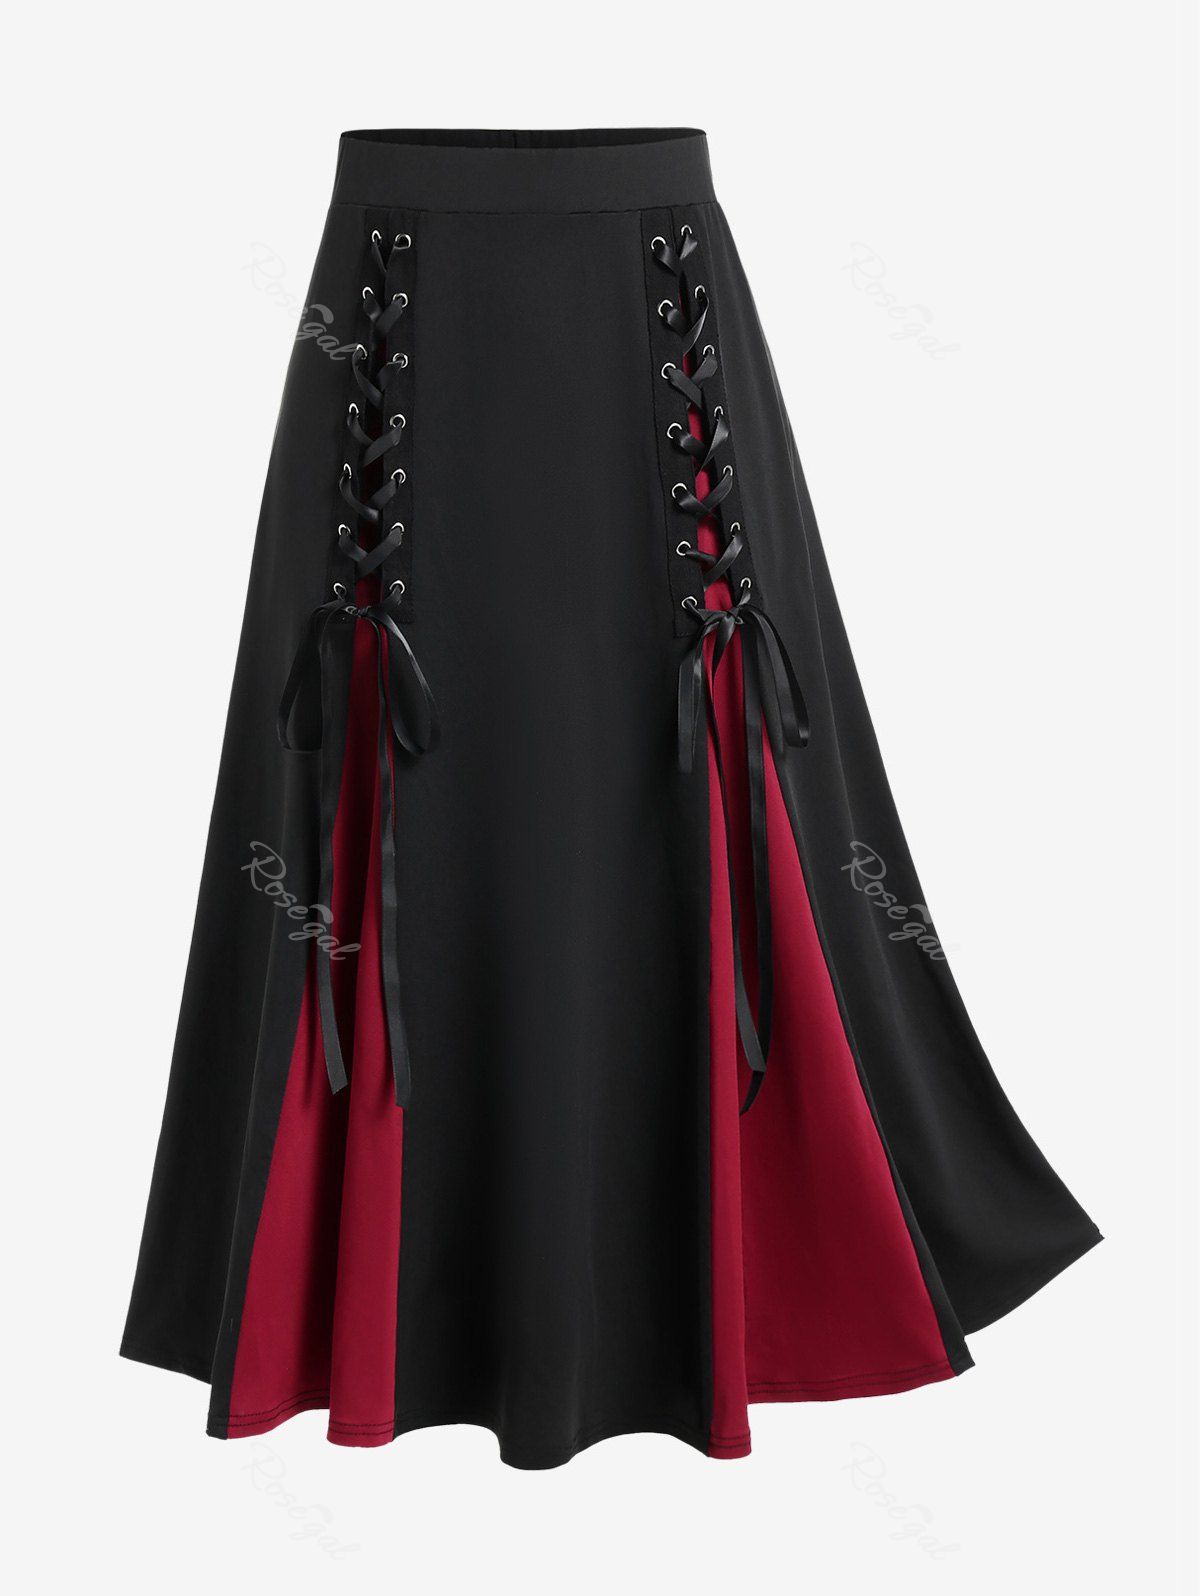 Chic Gothic Lace Up Two Tone Godet Hem Midi A Line Skirt  